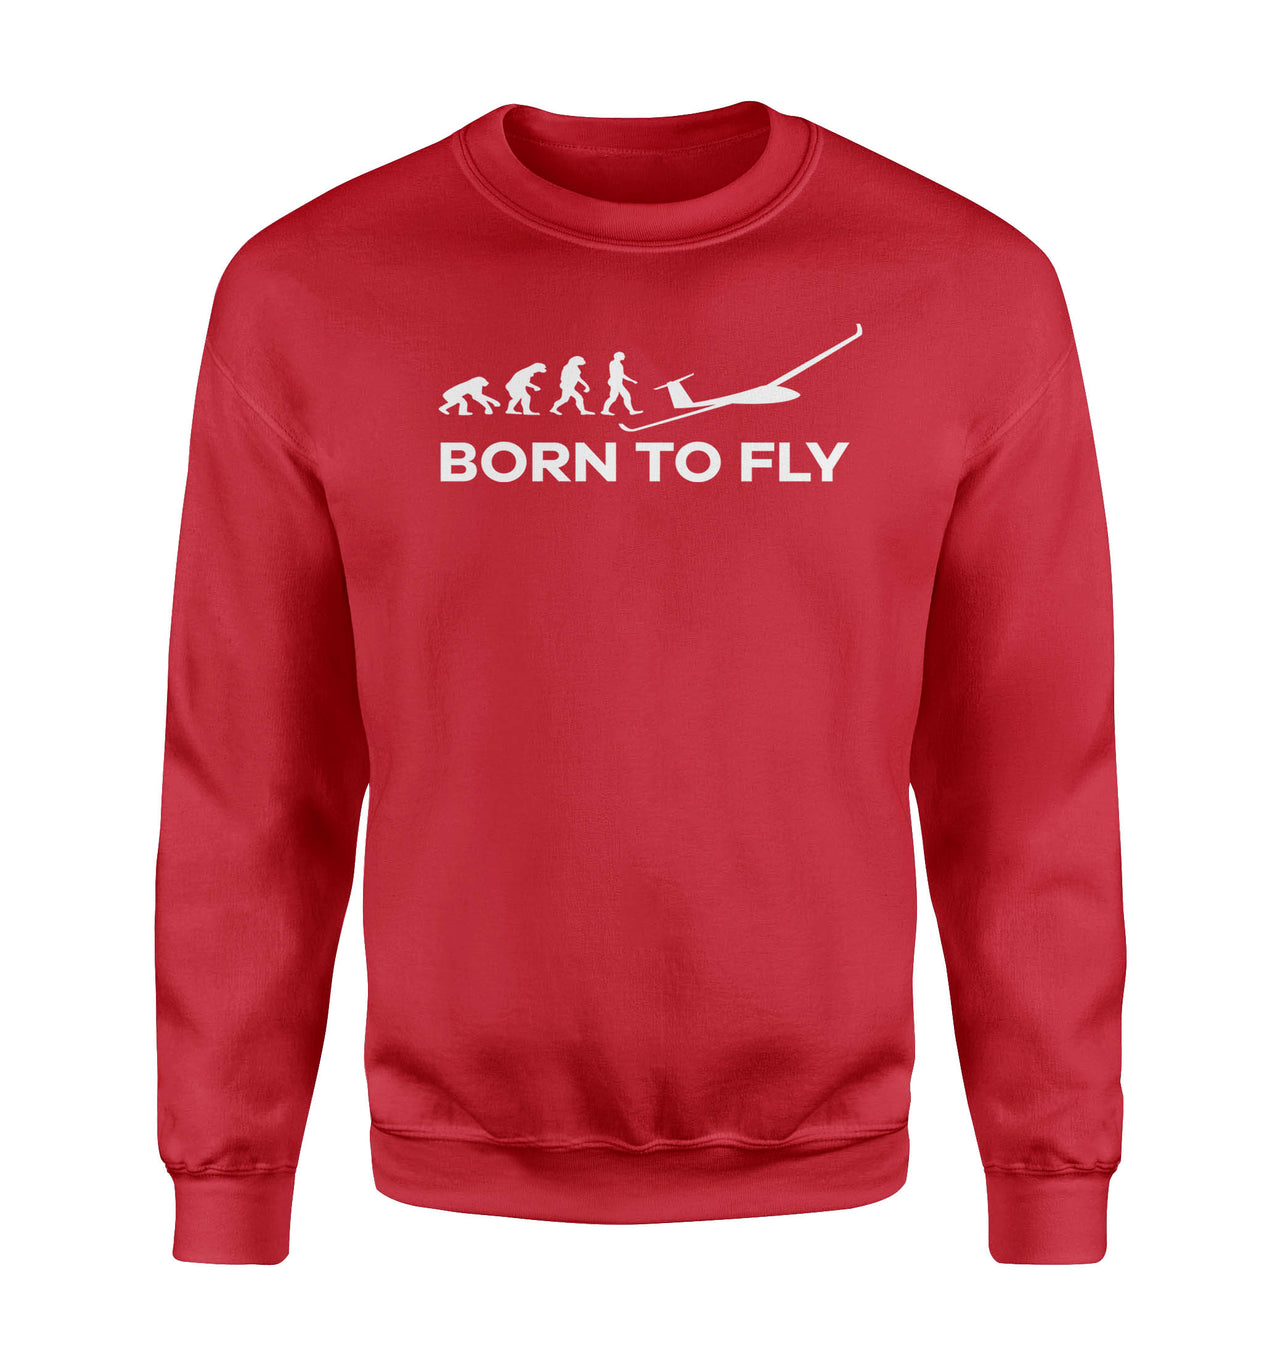 Born To Fly Glider Designed Sweatshirts